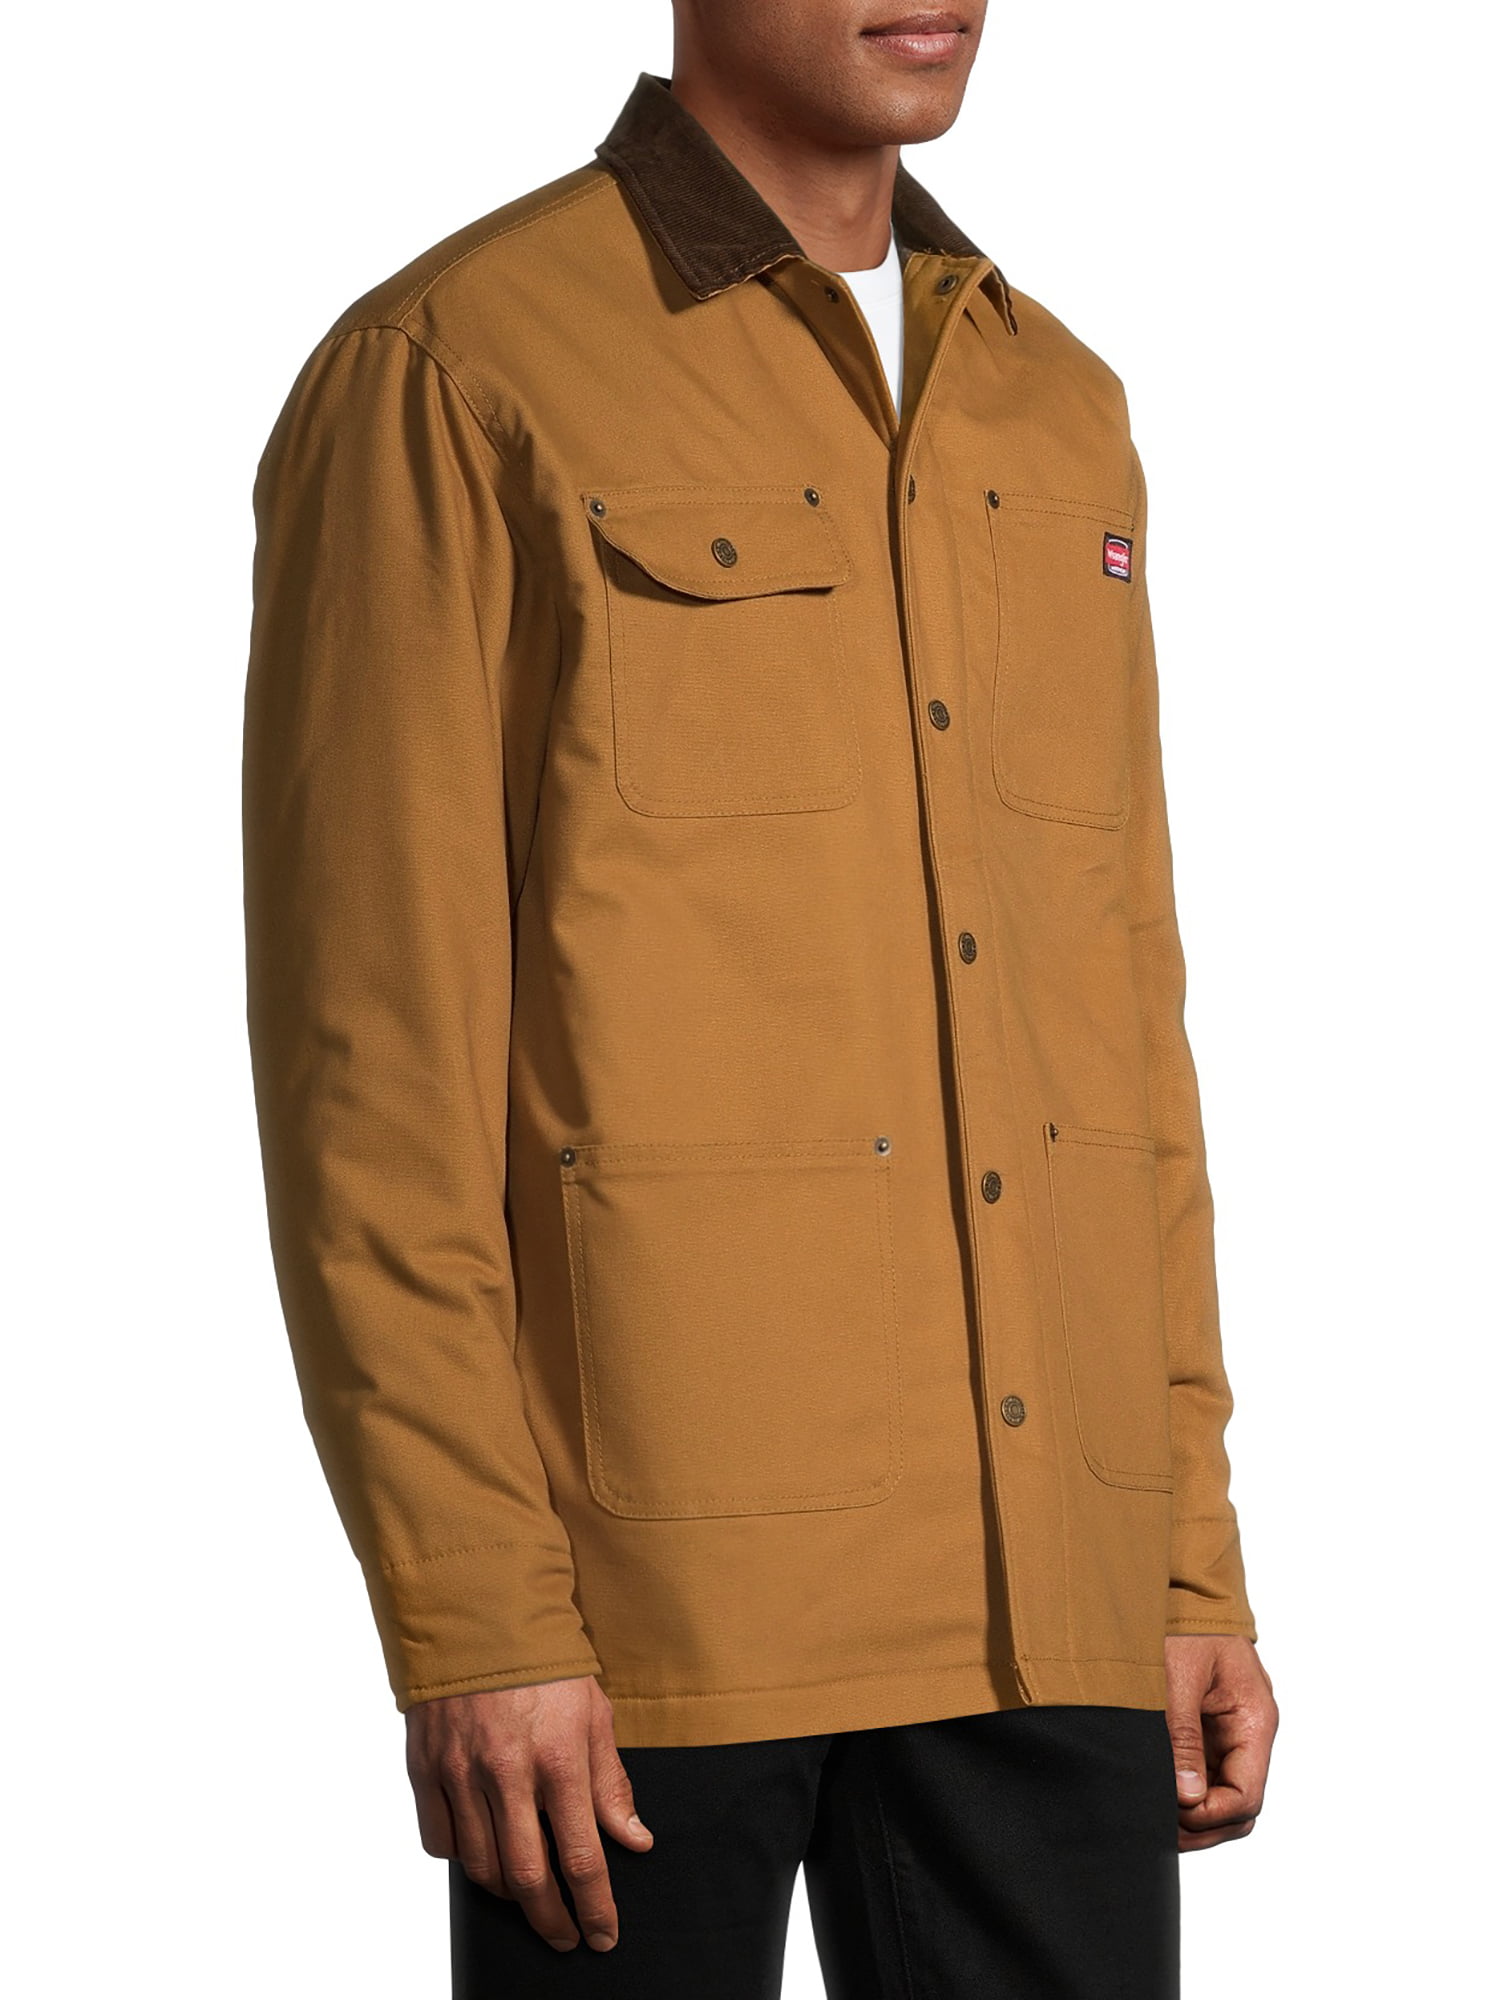 Wrangler Men's Flex Barn Chore Coat Jacket with Warm Durable Blanket Lining  